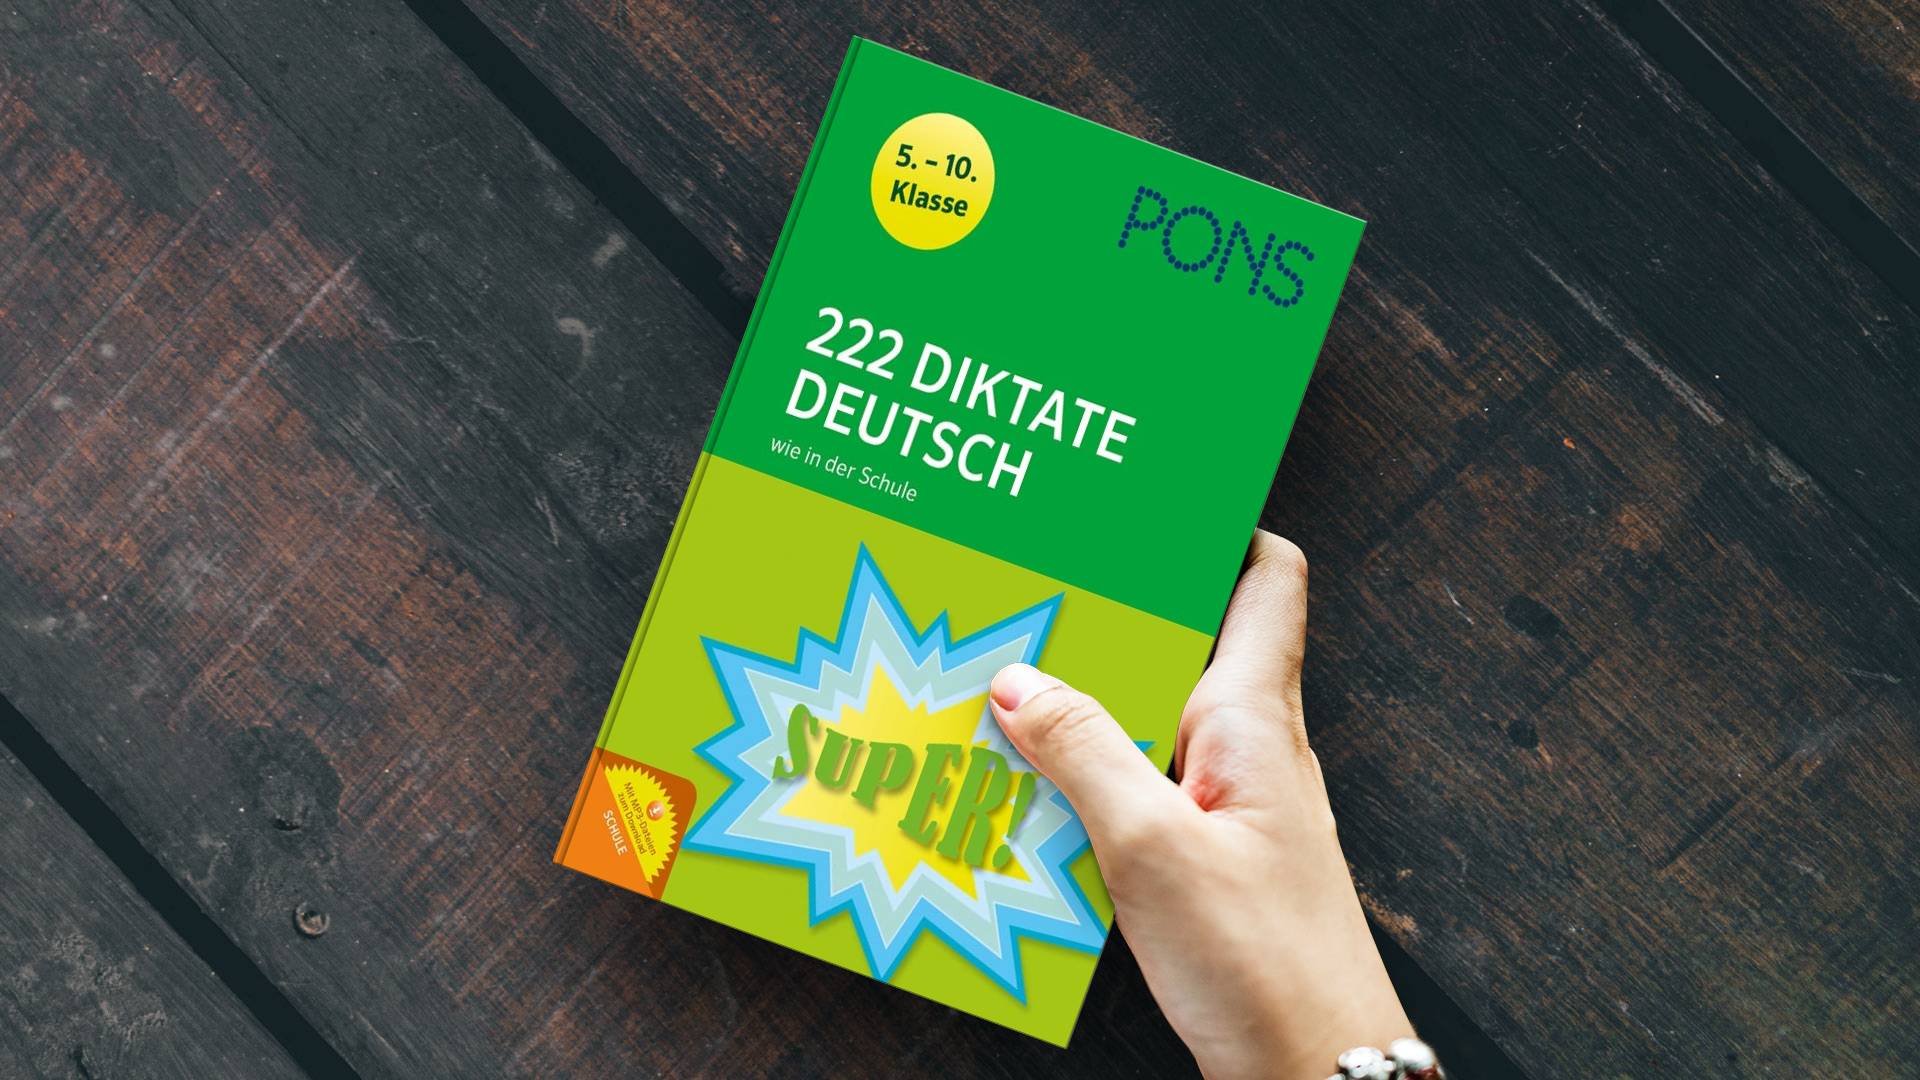 خرید کتاب زبان آلمانی | زبان استور | کتاب زبان آلمانی | PONS 222 DIKTATE DEUTSCH WIE IN DER SCHULE